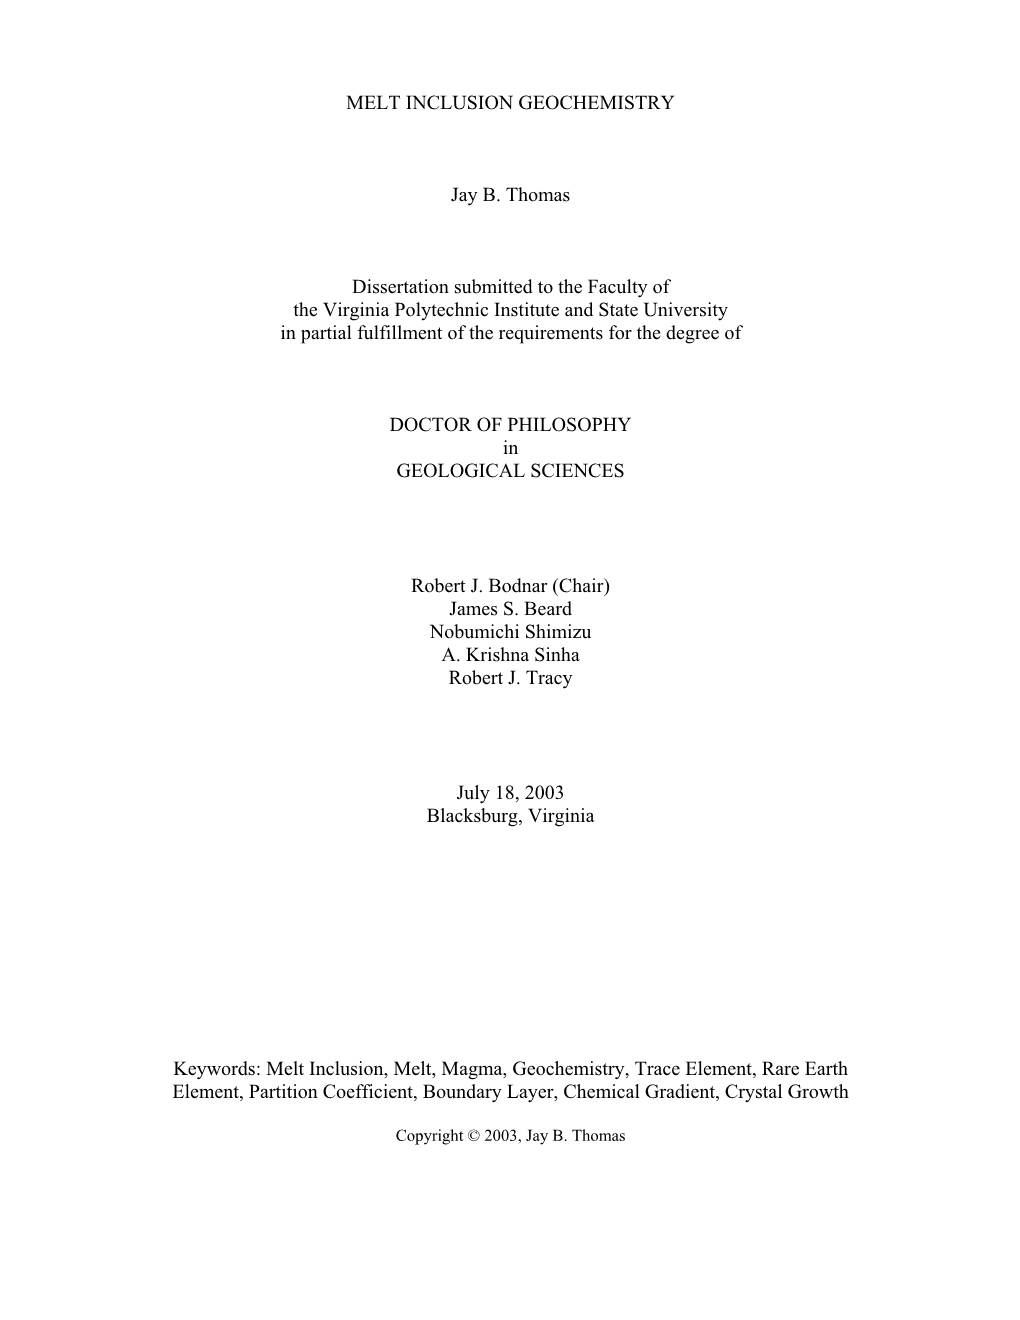 MELT INCLUSION GEOCHEMISTRY Jay B. Thomas Dissertation